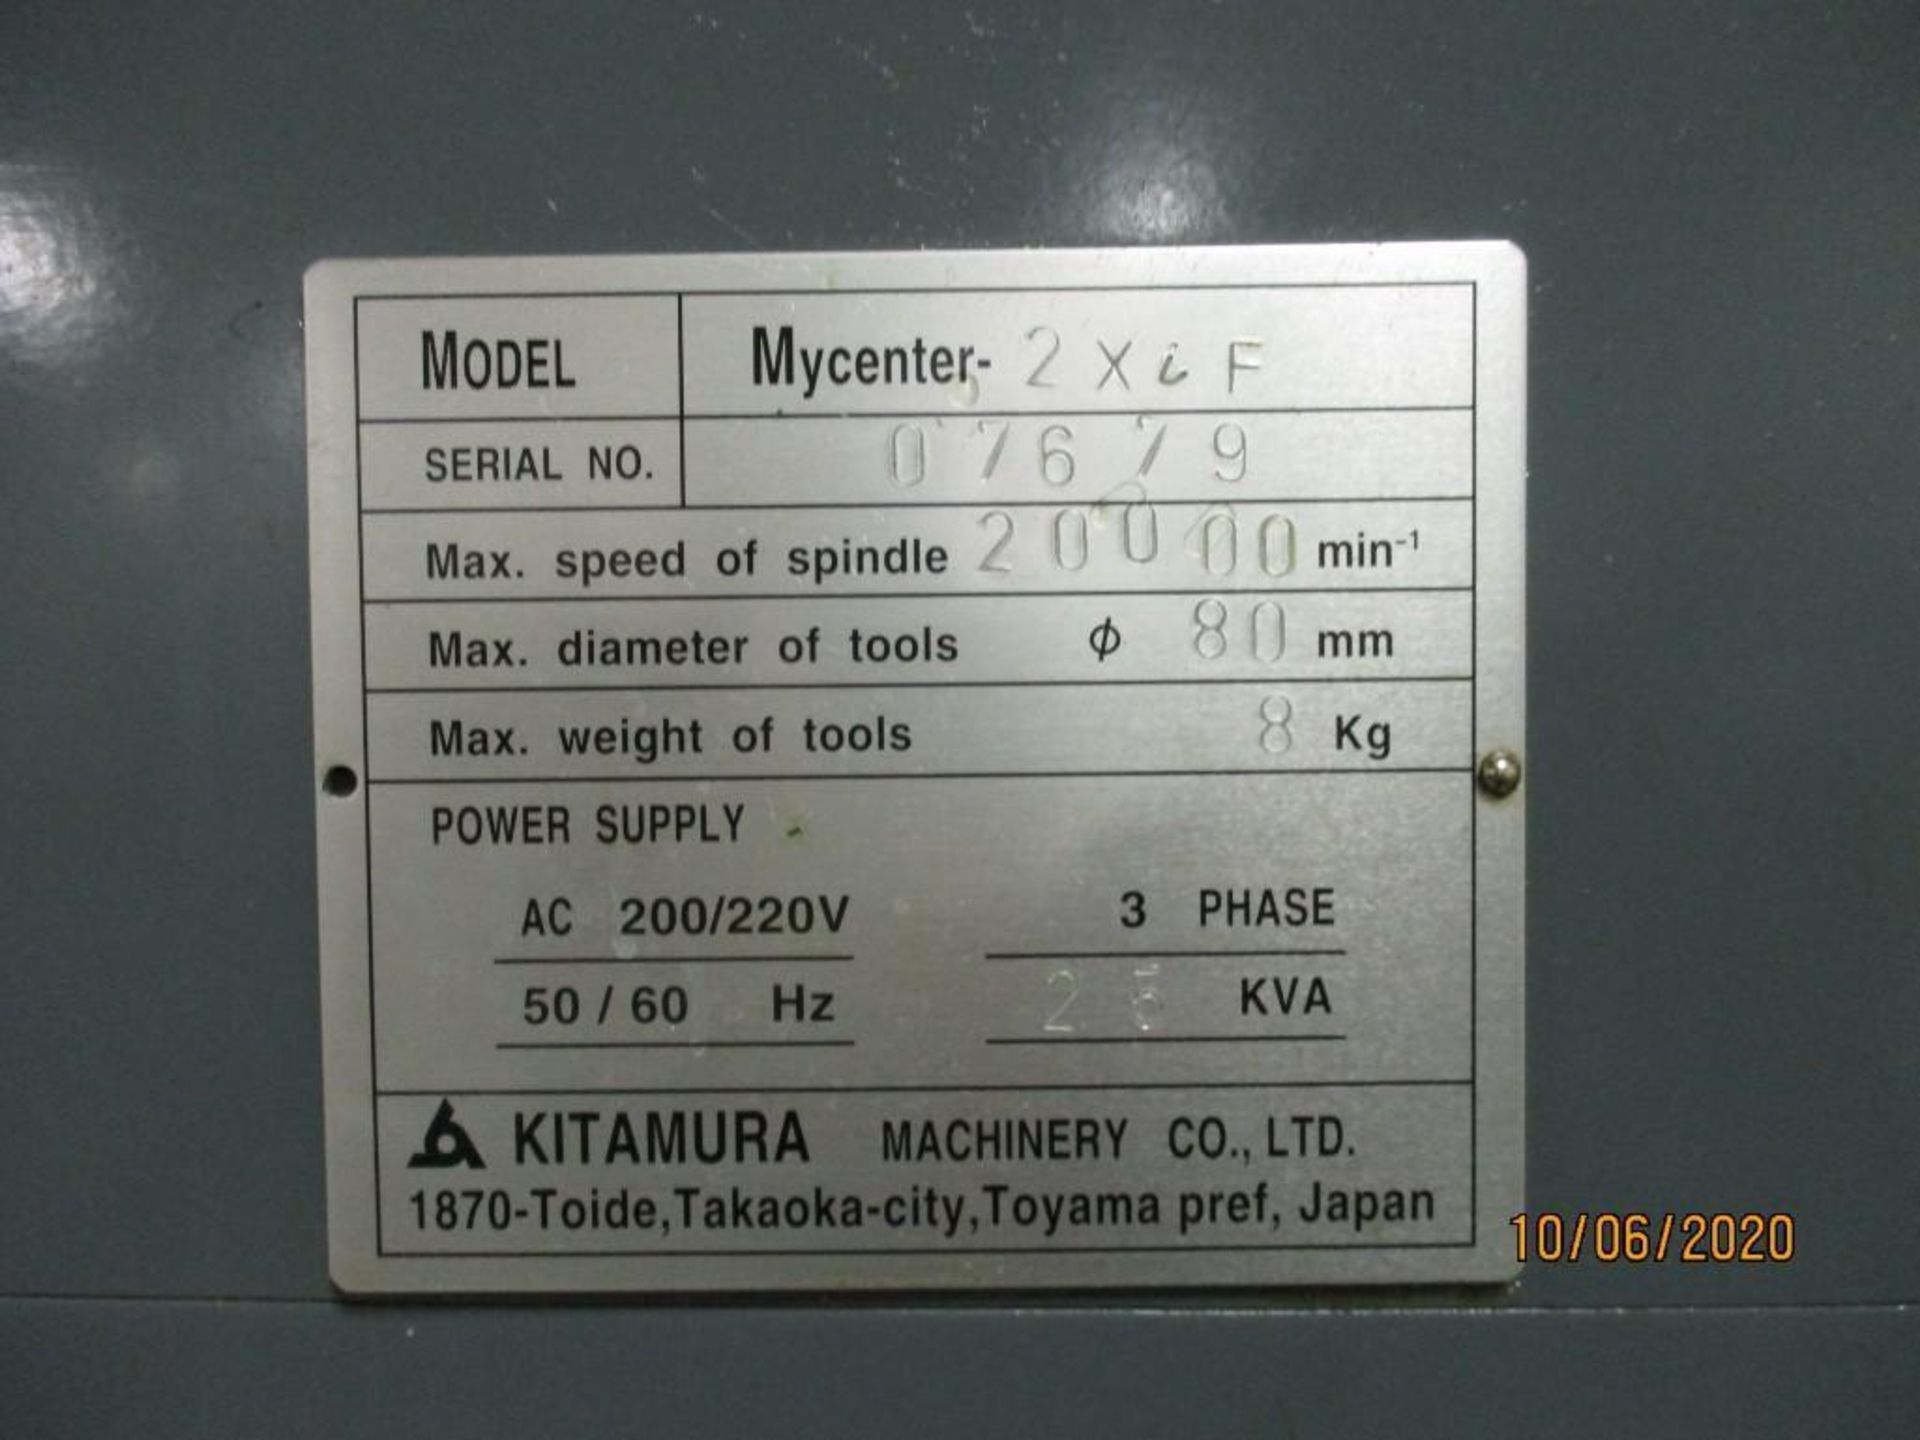 KITAMURA MYCENTER 2XiF SPARKCHANGER HIGH SPEED VERTICAL MACHINING CENTER, S/N 07679, NEW 2005 - Image 7 of 7